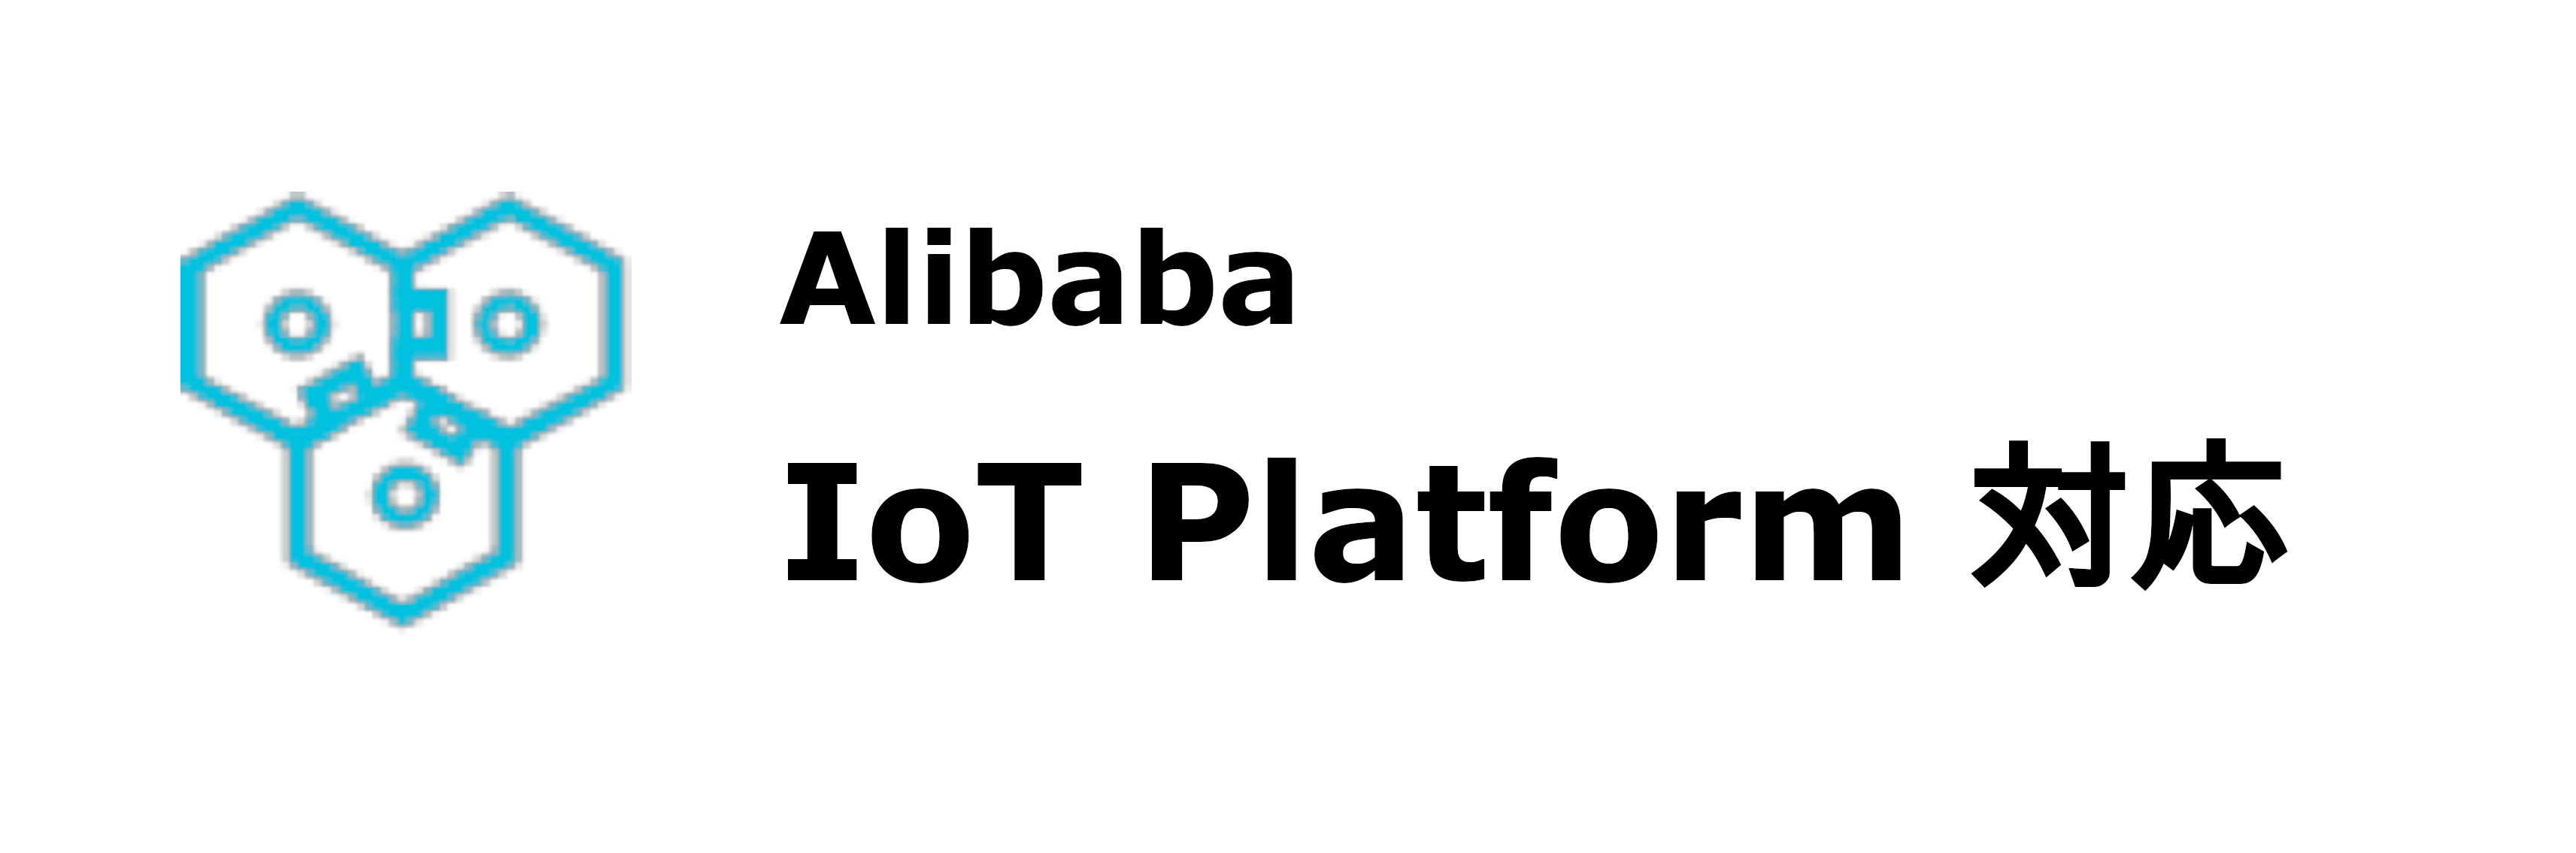 Alibaba IoT Platform対応